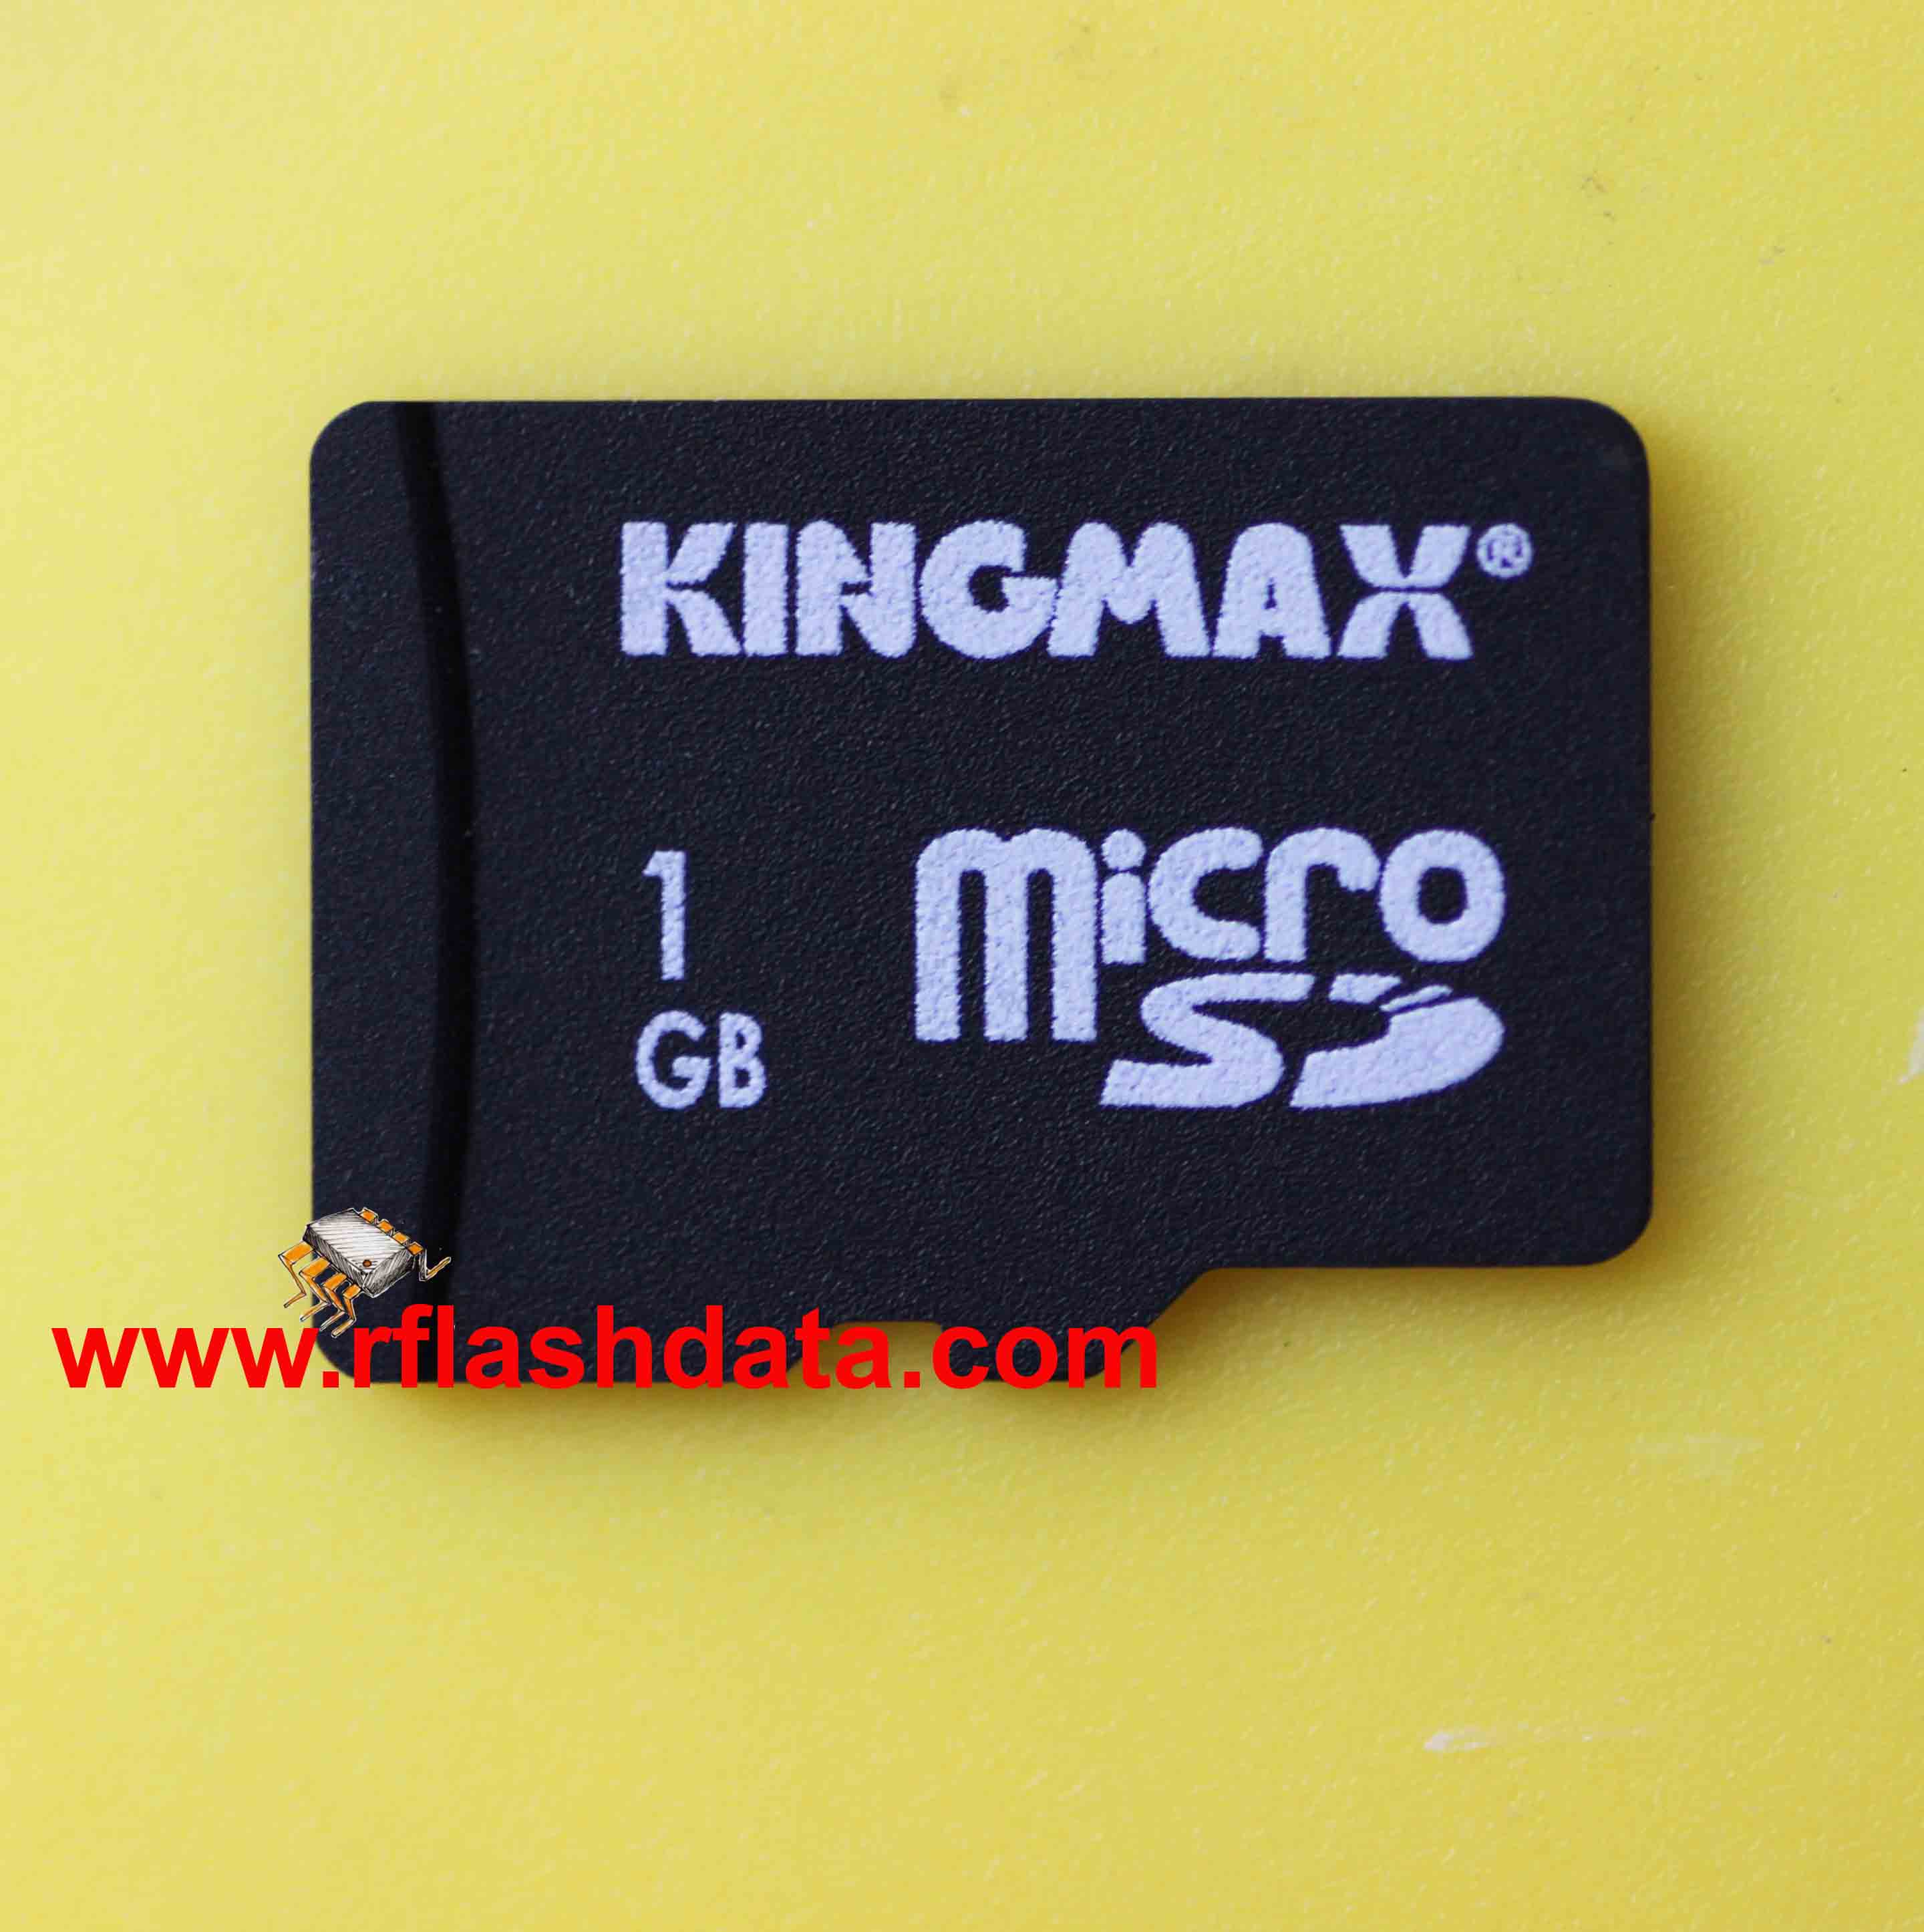 Kingmax microSD